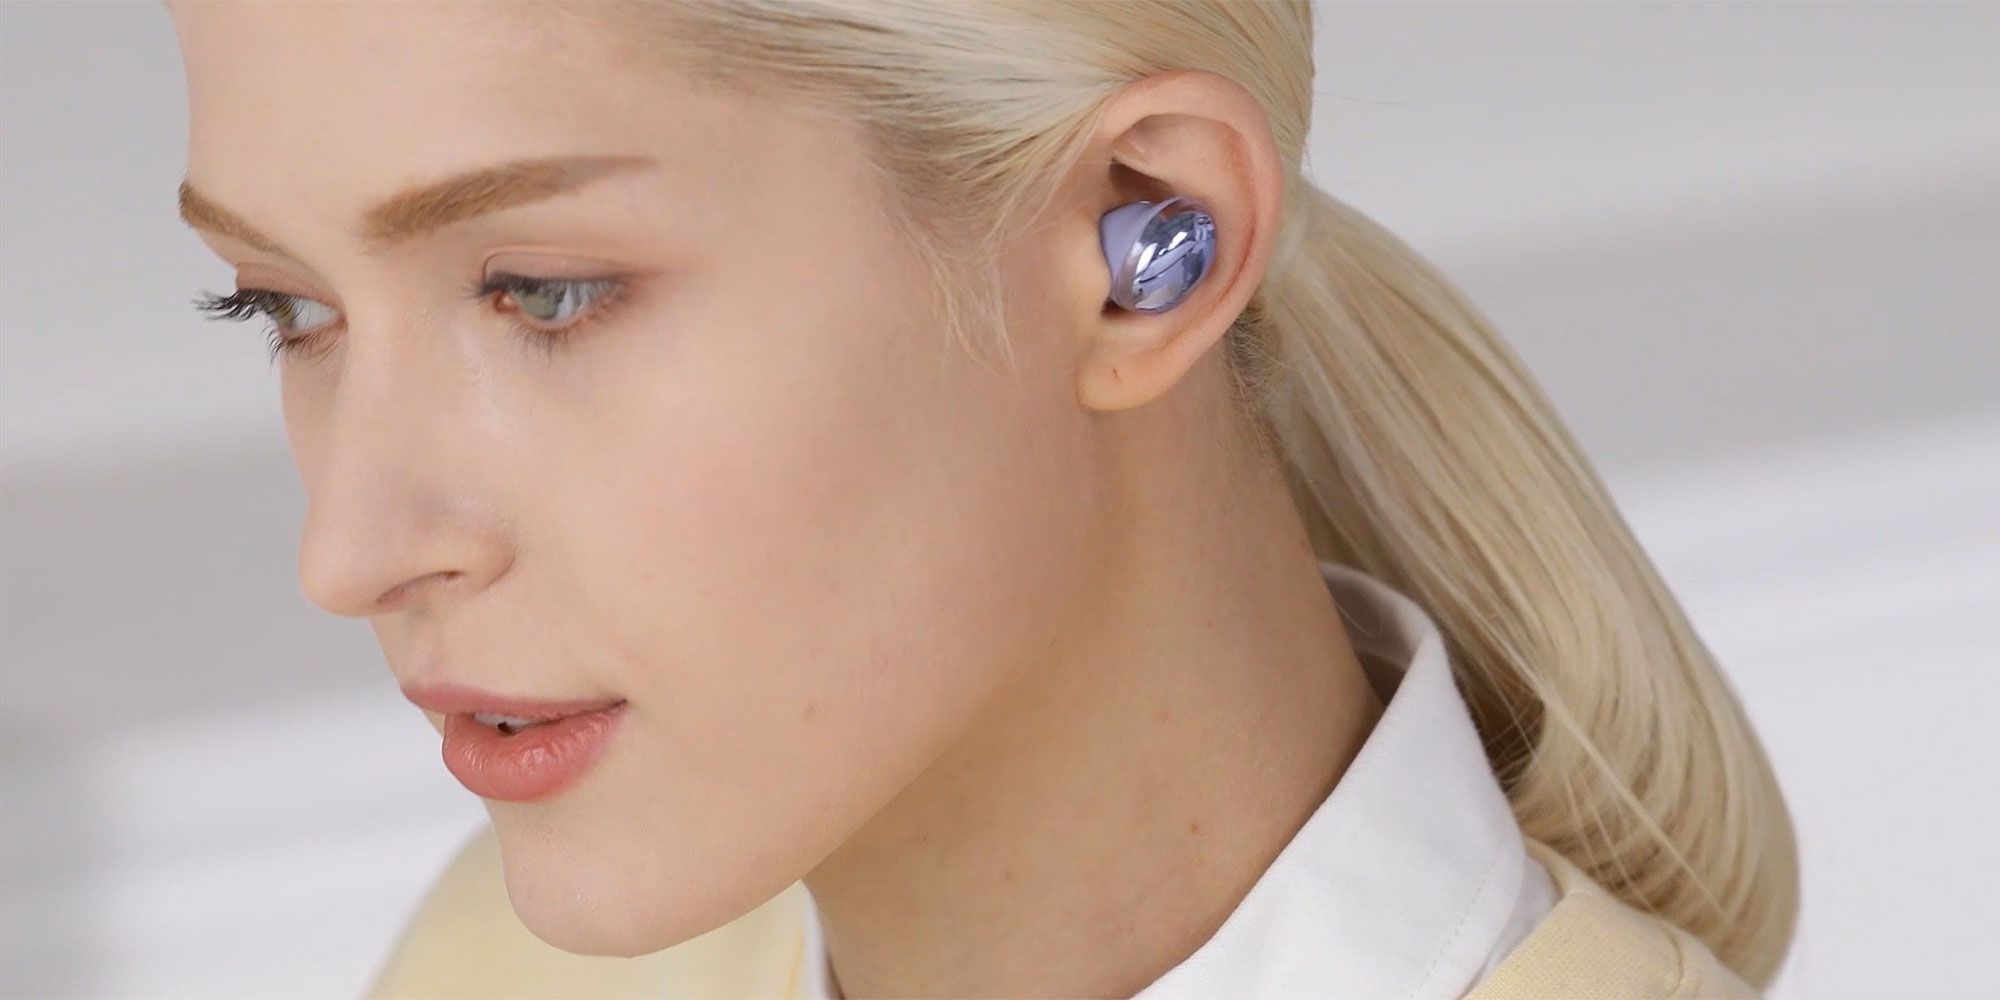 Woman wearing Galaxy Buds Pro earbuds